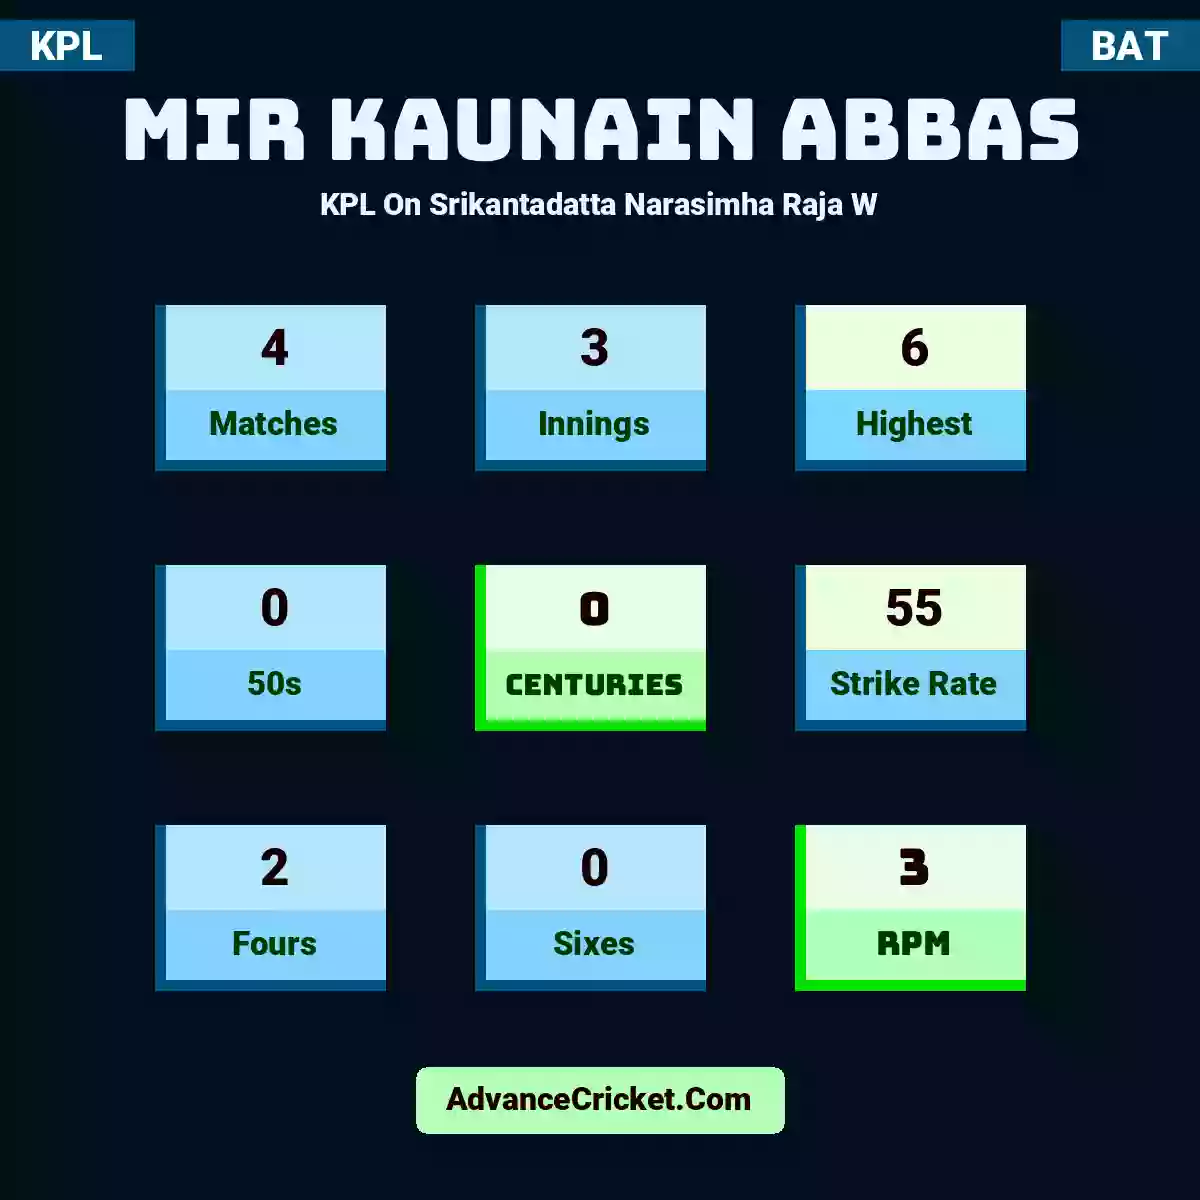 Mir Kaunain Abbas KPL  On Srikantadatta Narasimha Raja W, Mir Kaunain Abbas played 4 matches, scored 6 runs as highest, 0 half-centuries, and 0 centuries, with a strike rate of 55. M.Abbas hit 2 fours and 0 sixes, with an RPM of 3.